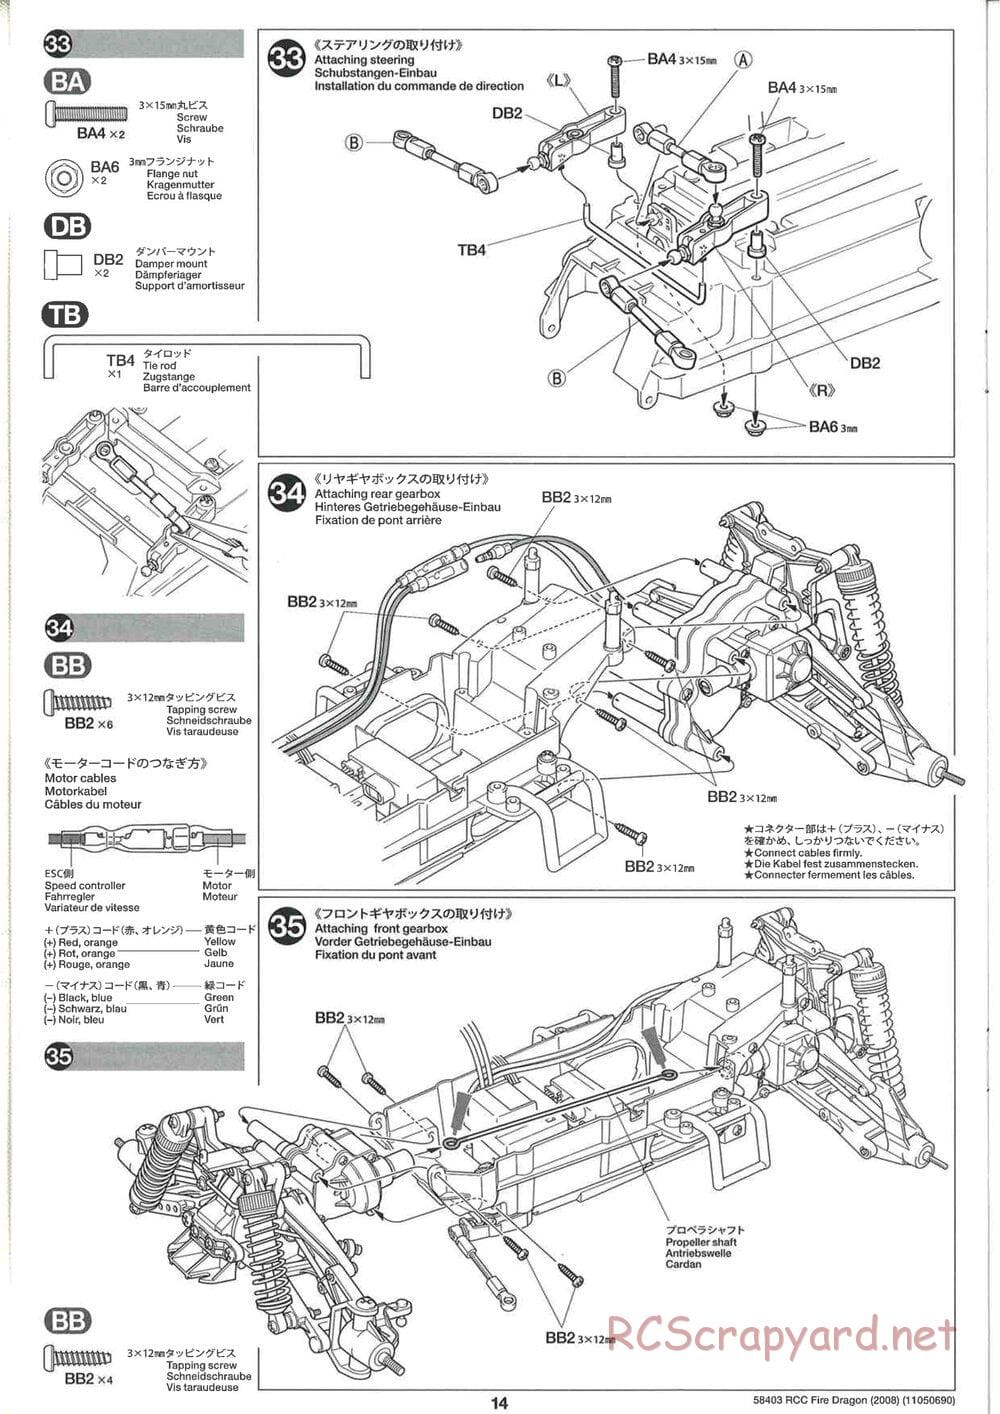 Tamiya - Fire Dragon 2008 - TS2 Chassis - Manual - Page 14